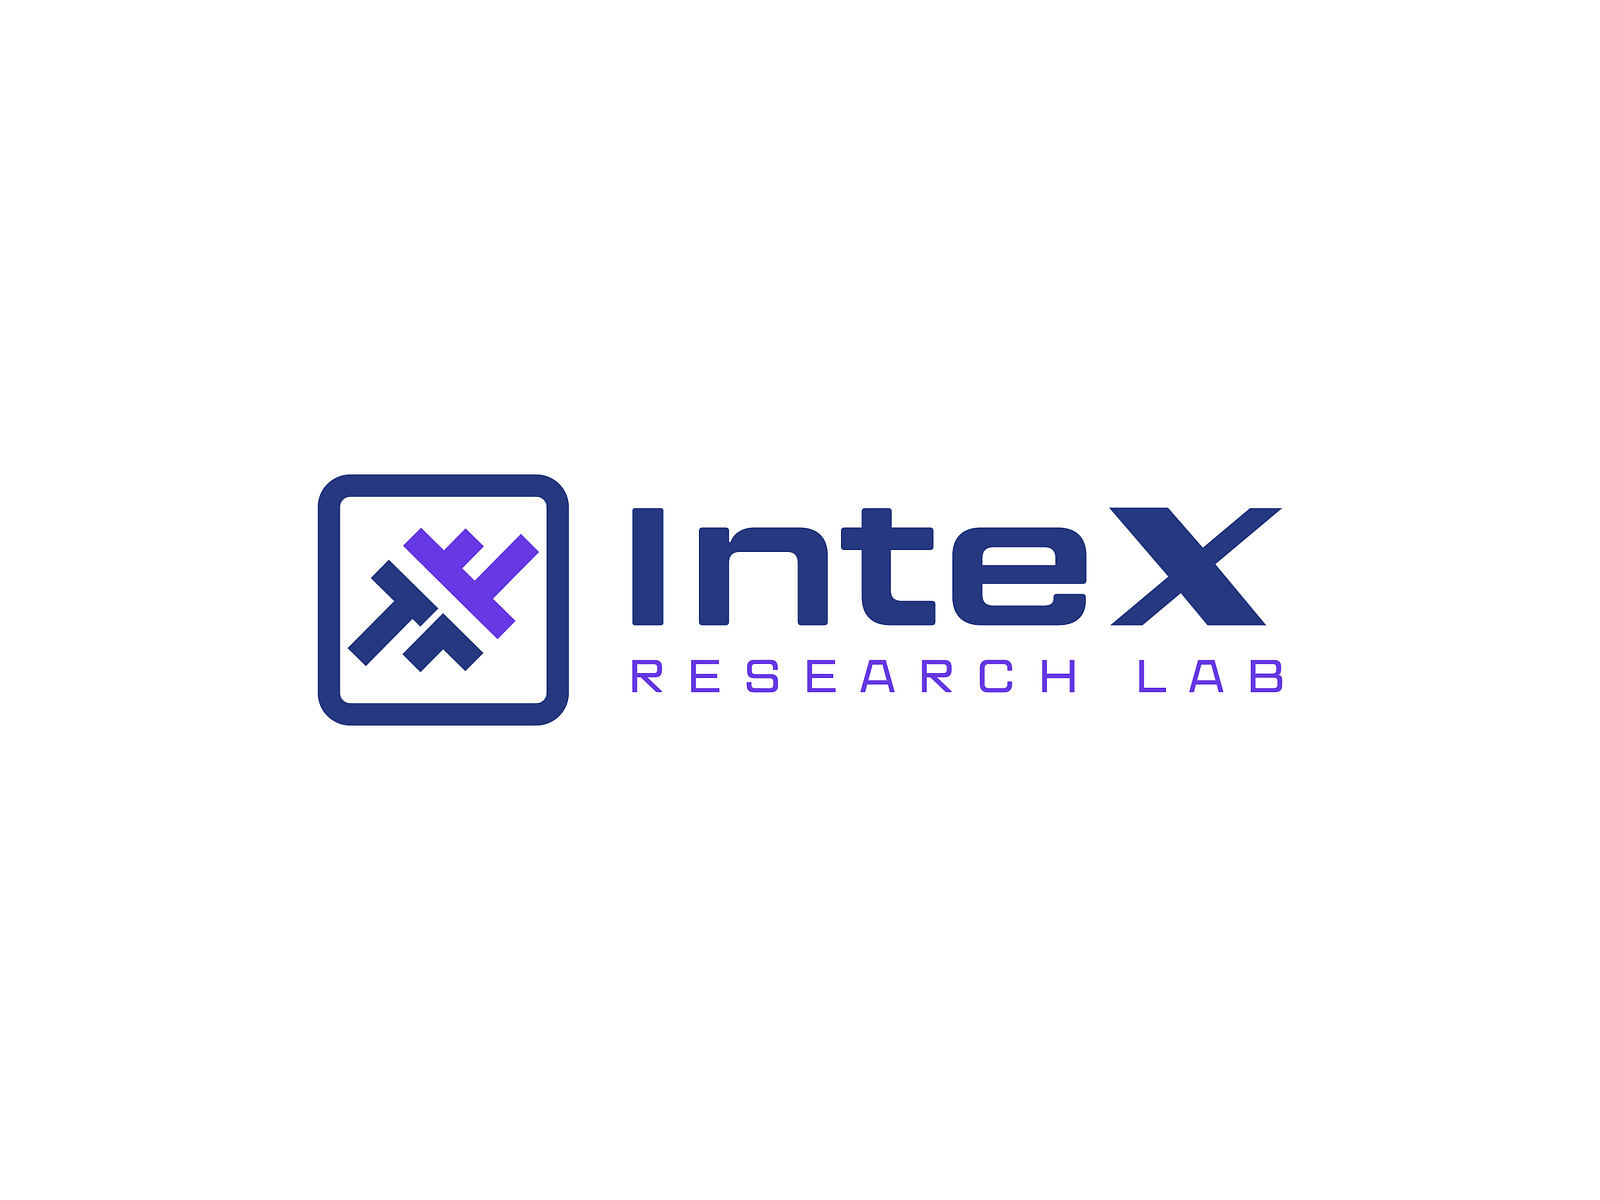 Intex Research Lab Logo Design by Masum Faruqi on Dribbble